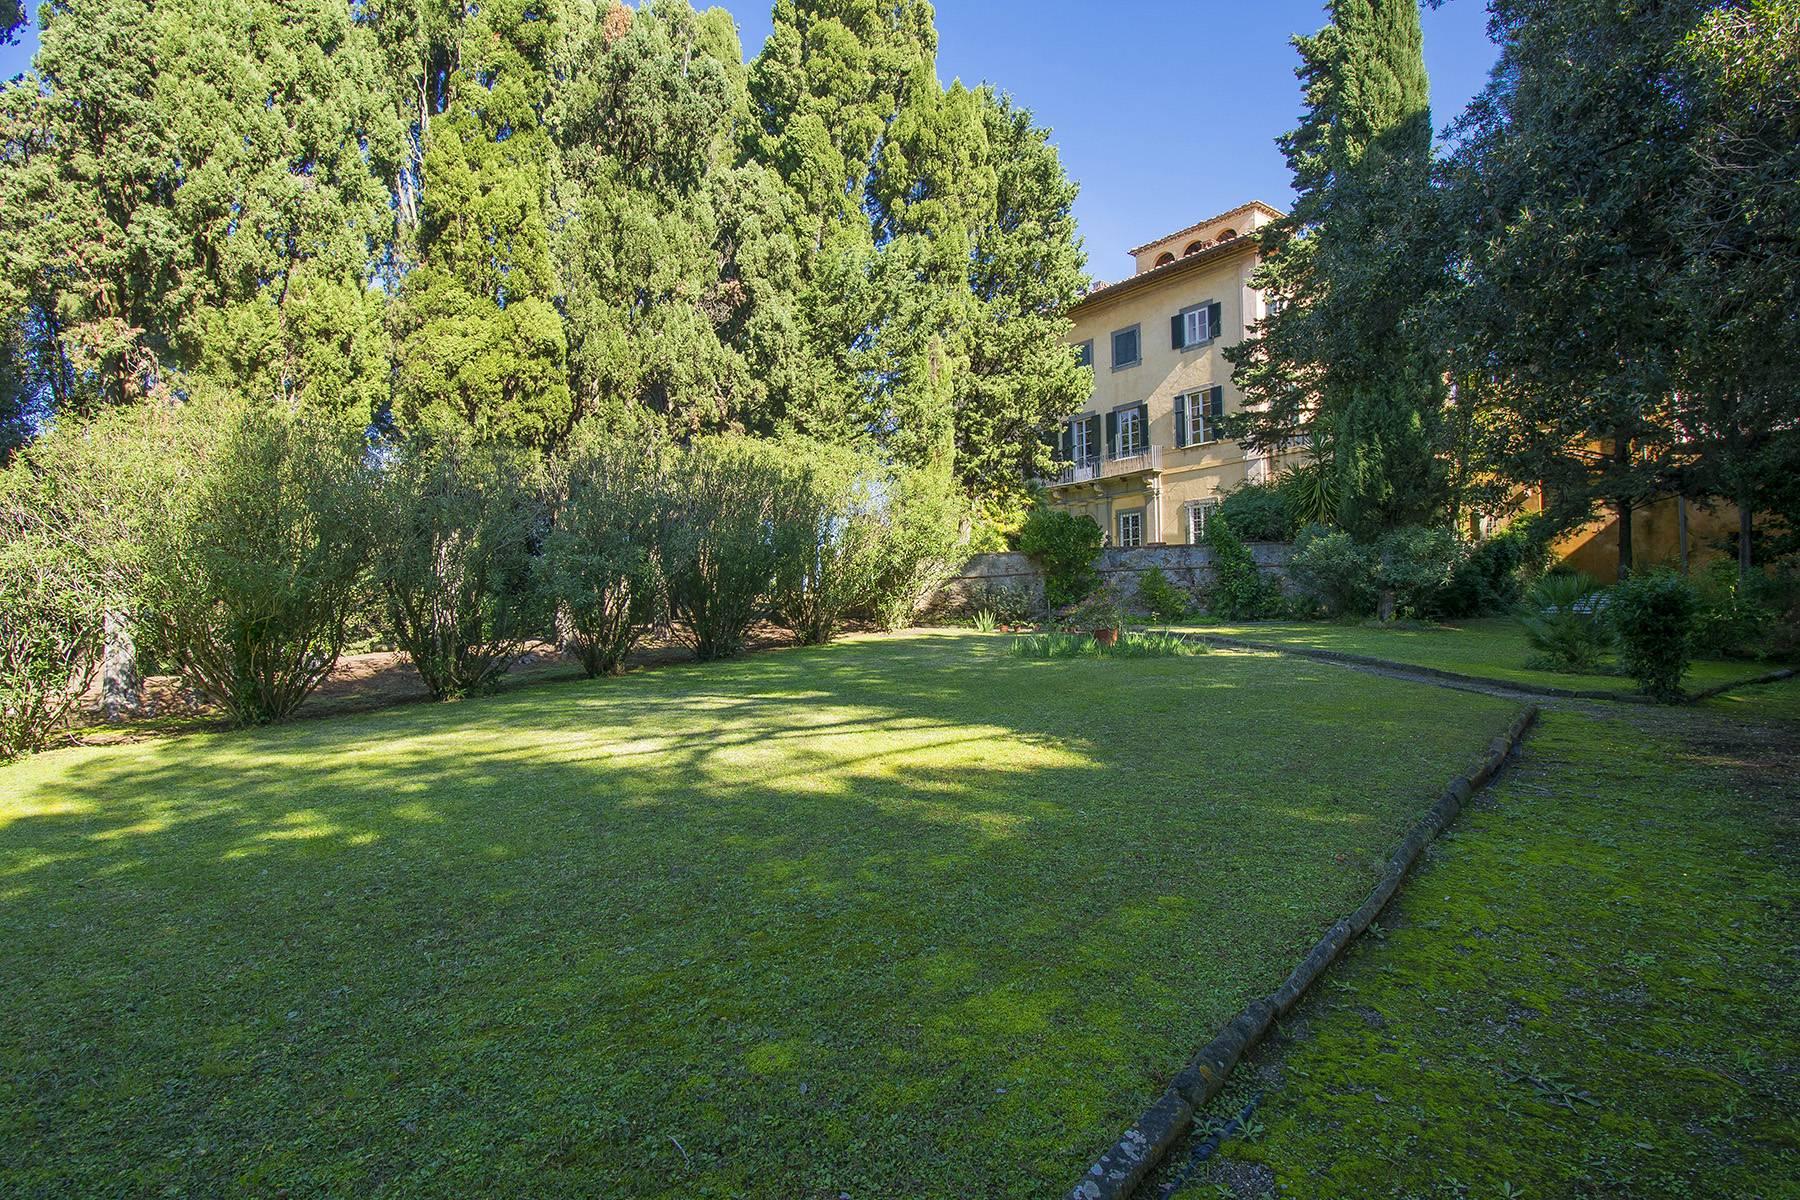 Charming Medicean Villa on the Tuscan hills - 31